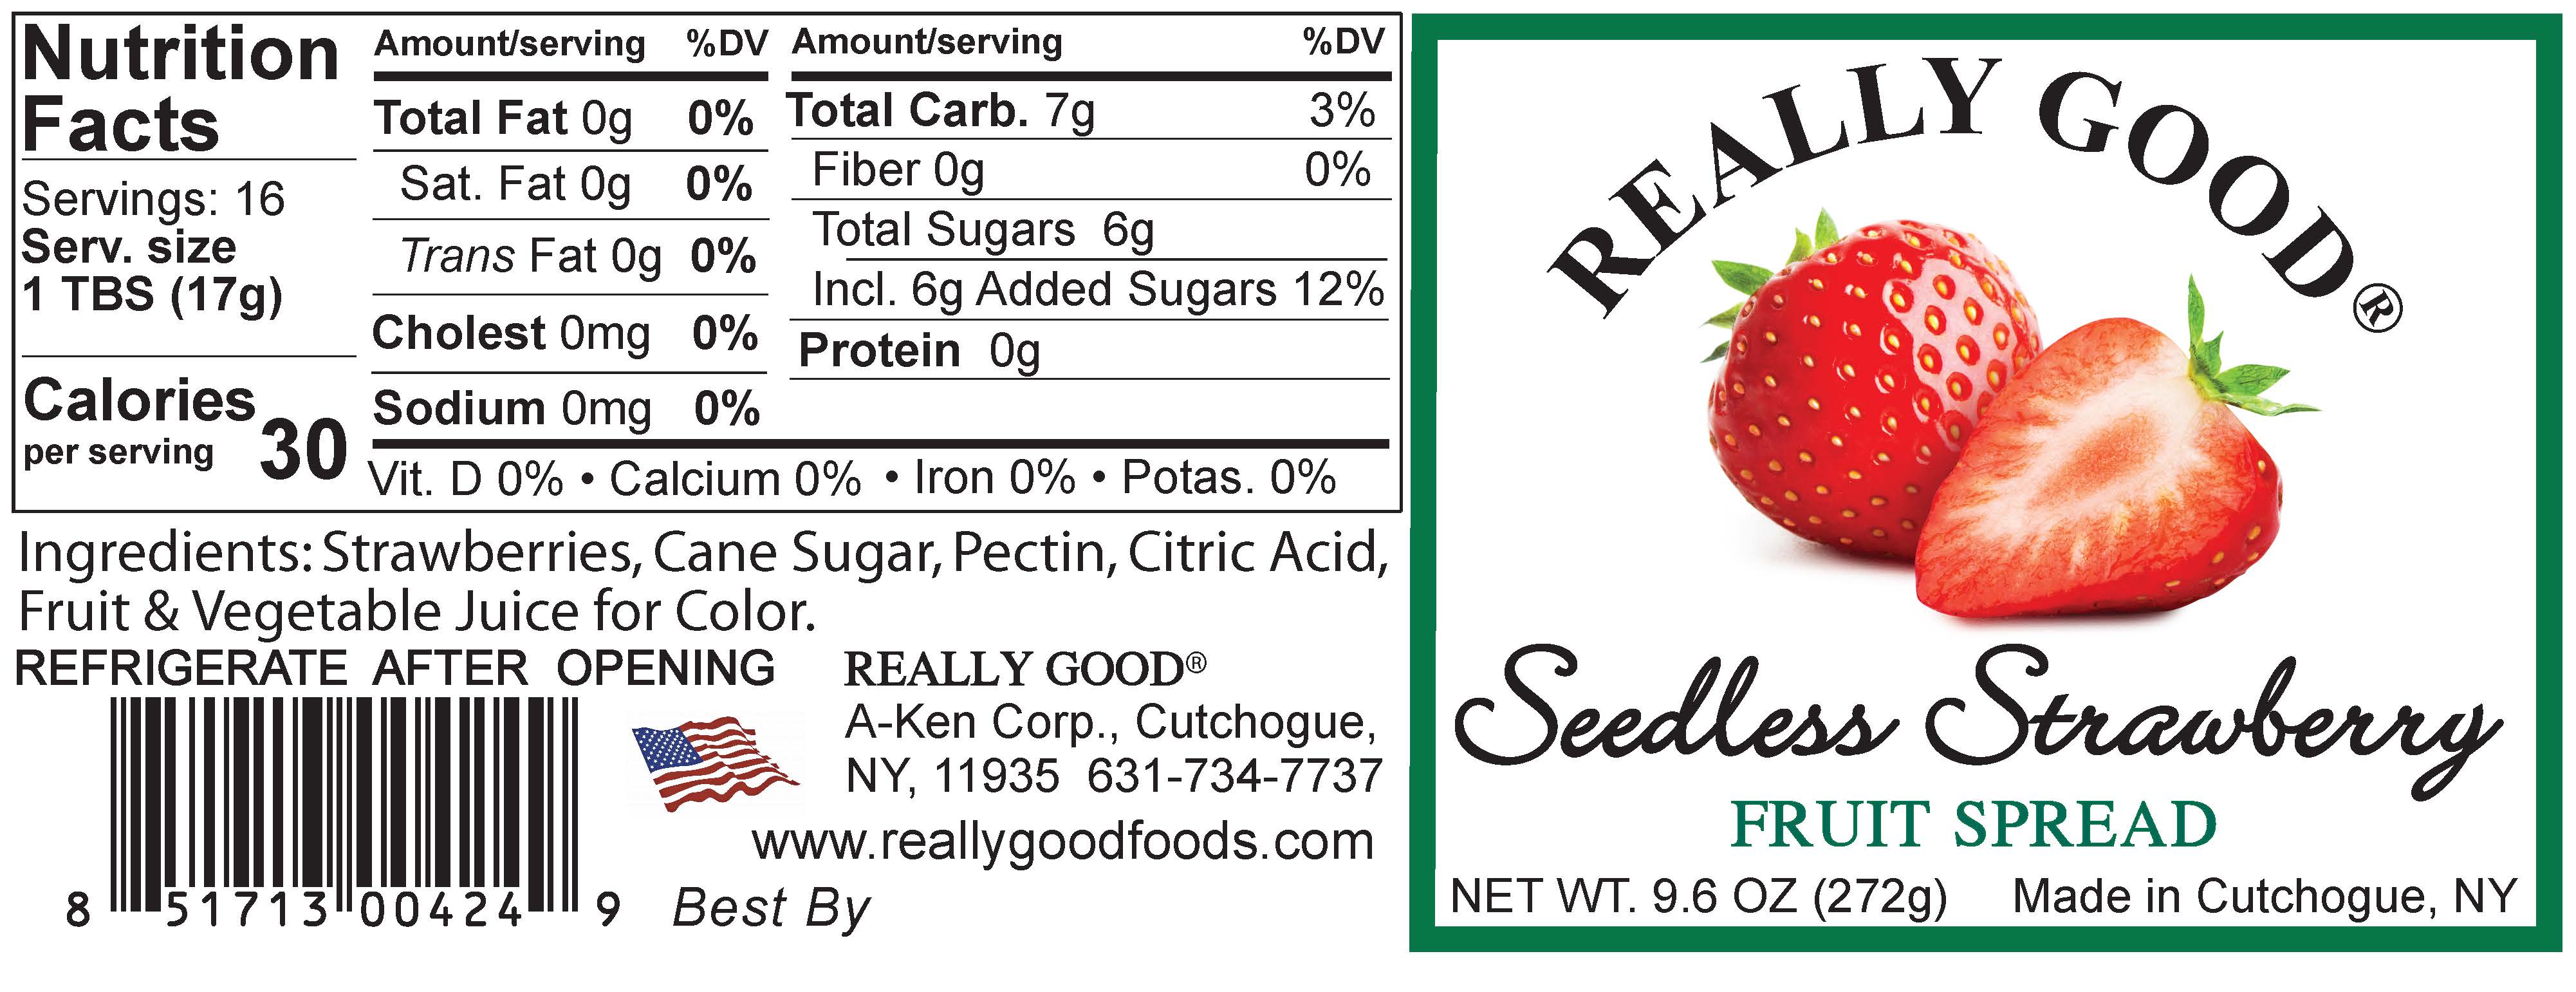 seedless-strawberry-9.6oz-label.jpg